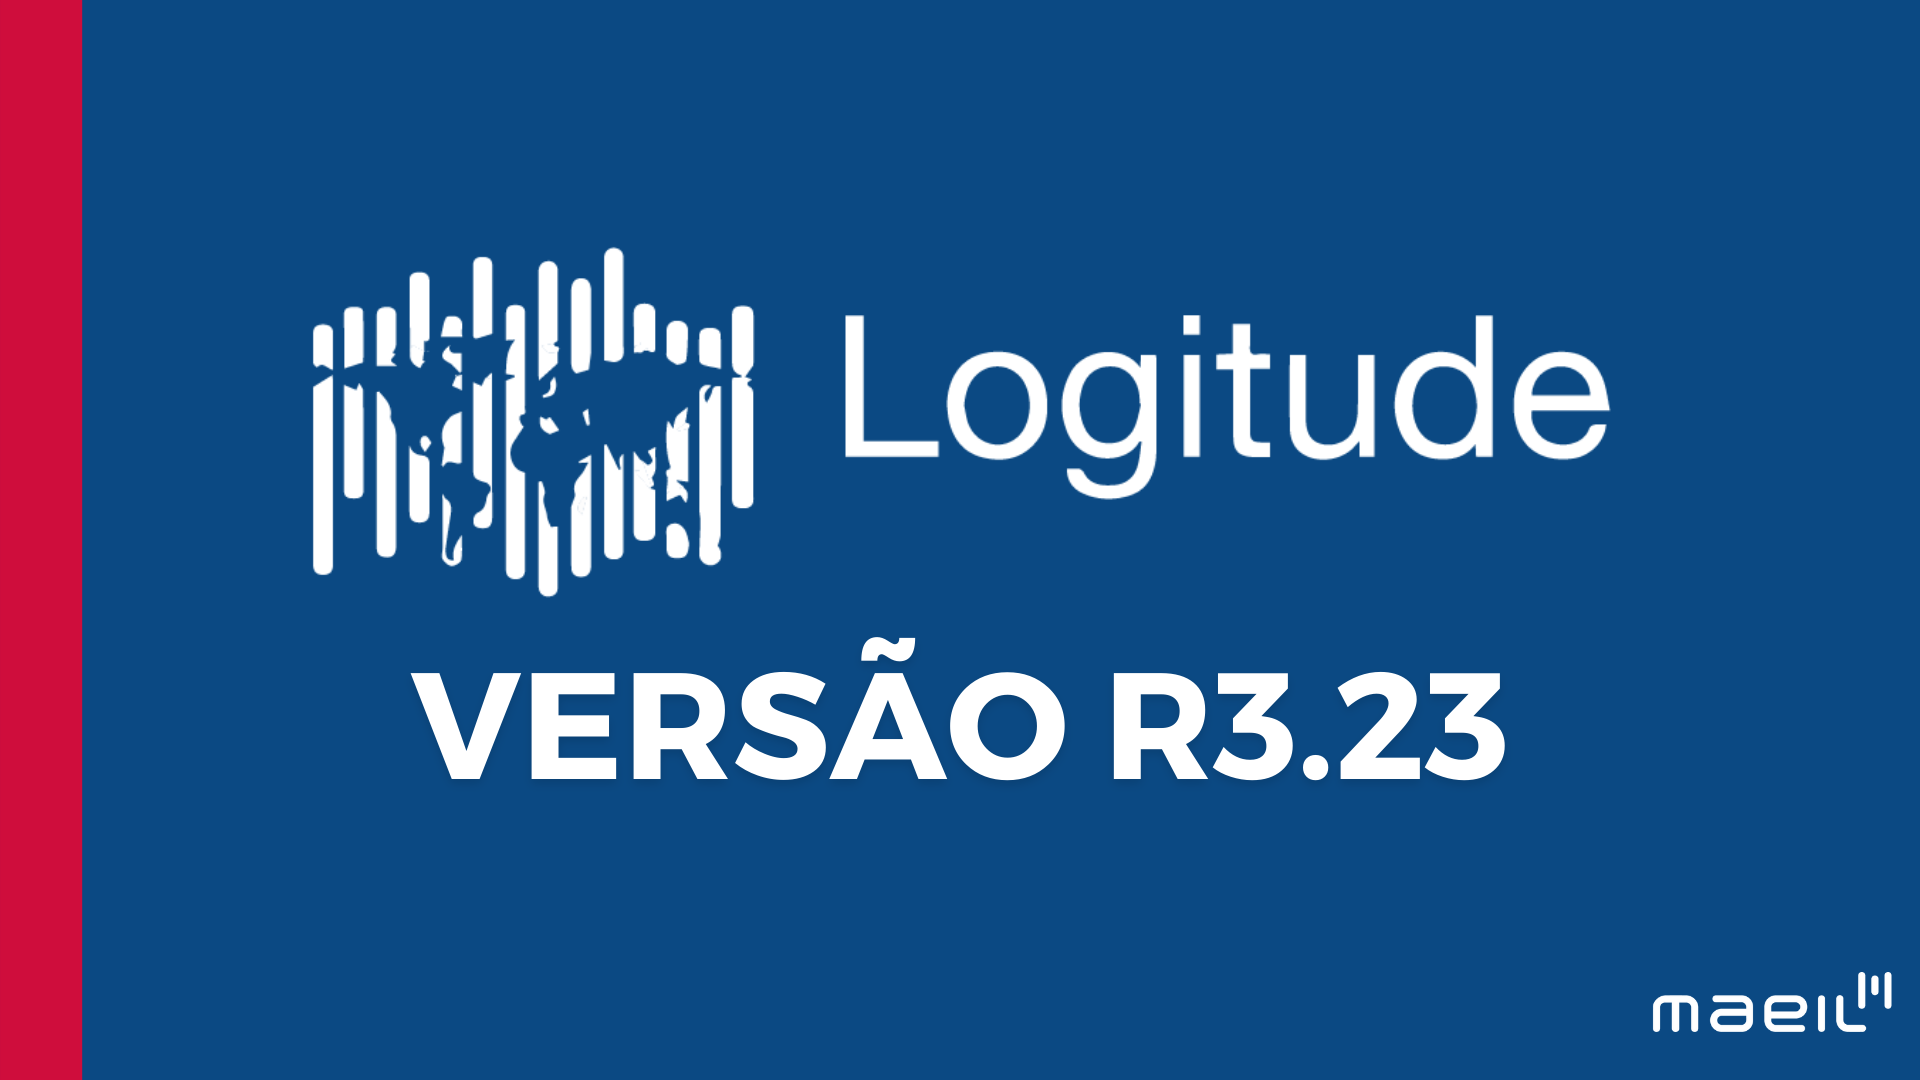 You are currently viewing Nova Versão Logitude R3.23